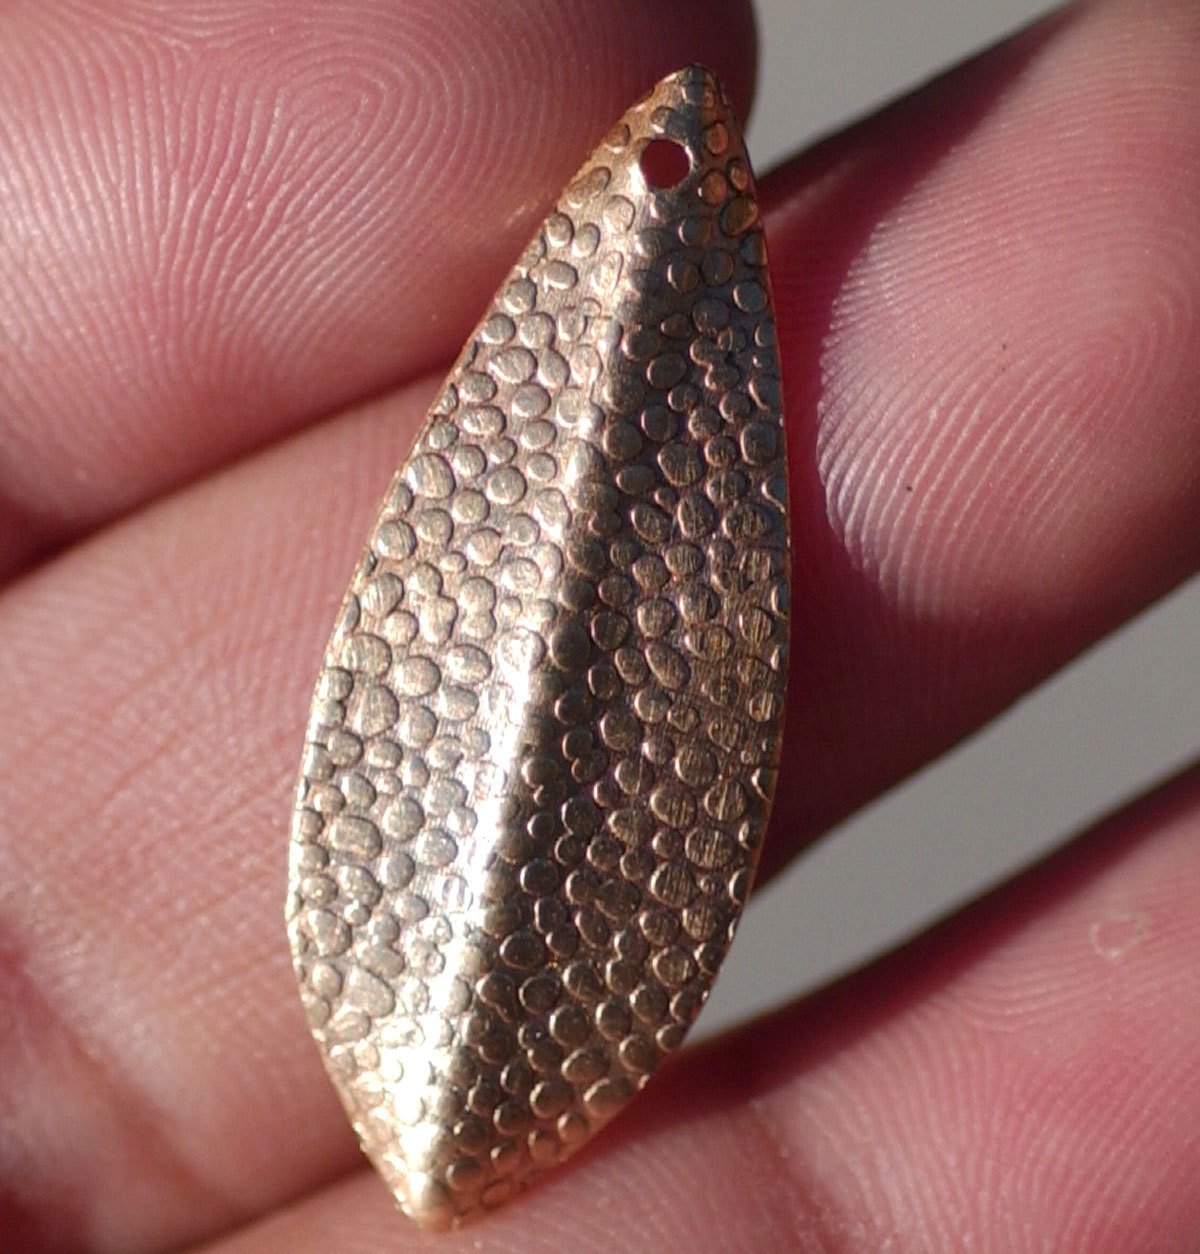 Bronze Shapes Blanks Leaf - Leaves - Tree Fall Greenery Leaf 3D 30mm x 12mm shape Blank - 6 pieces